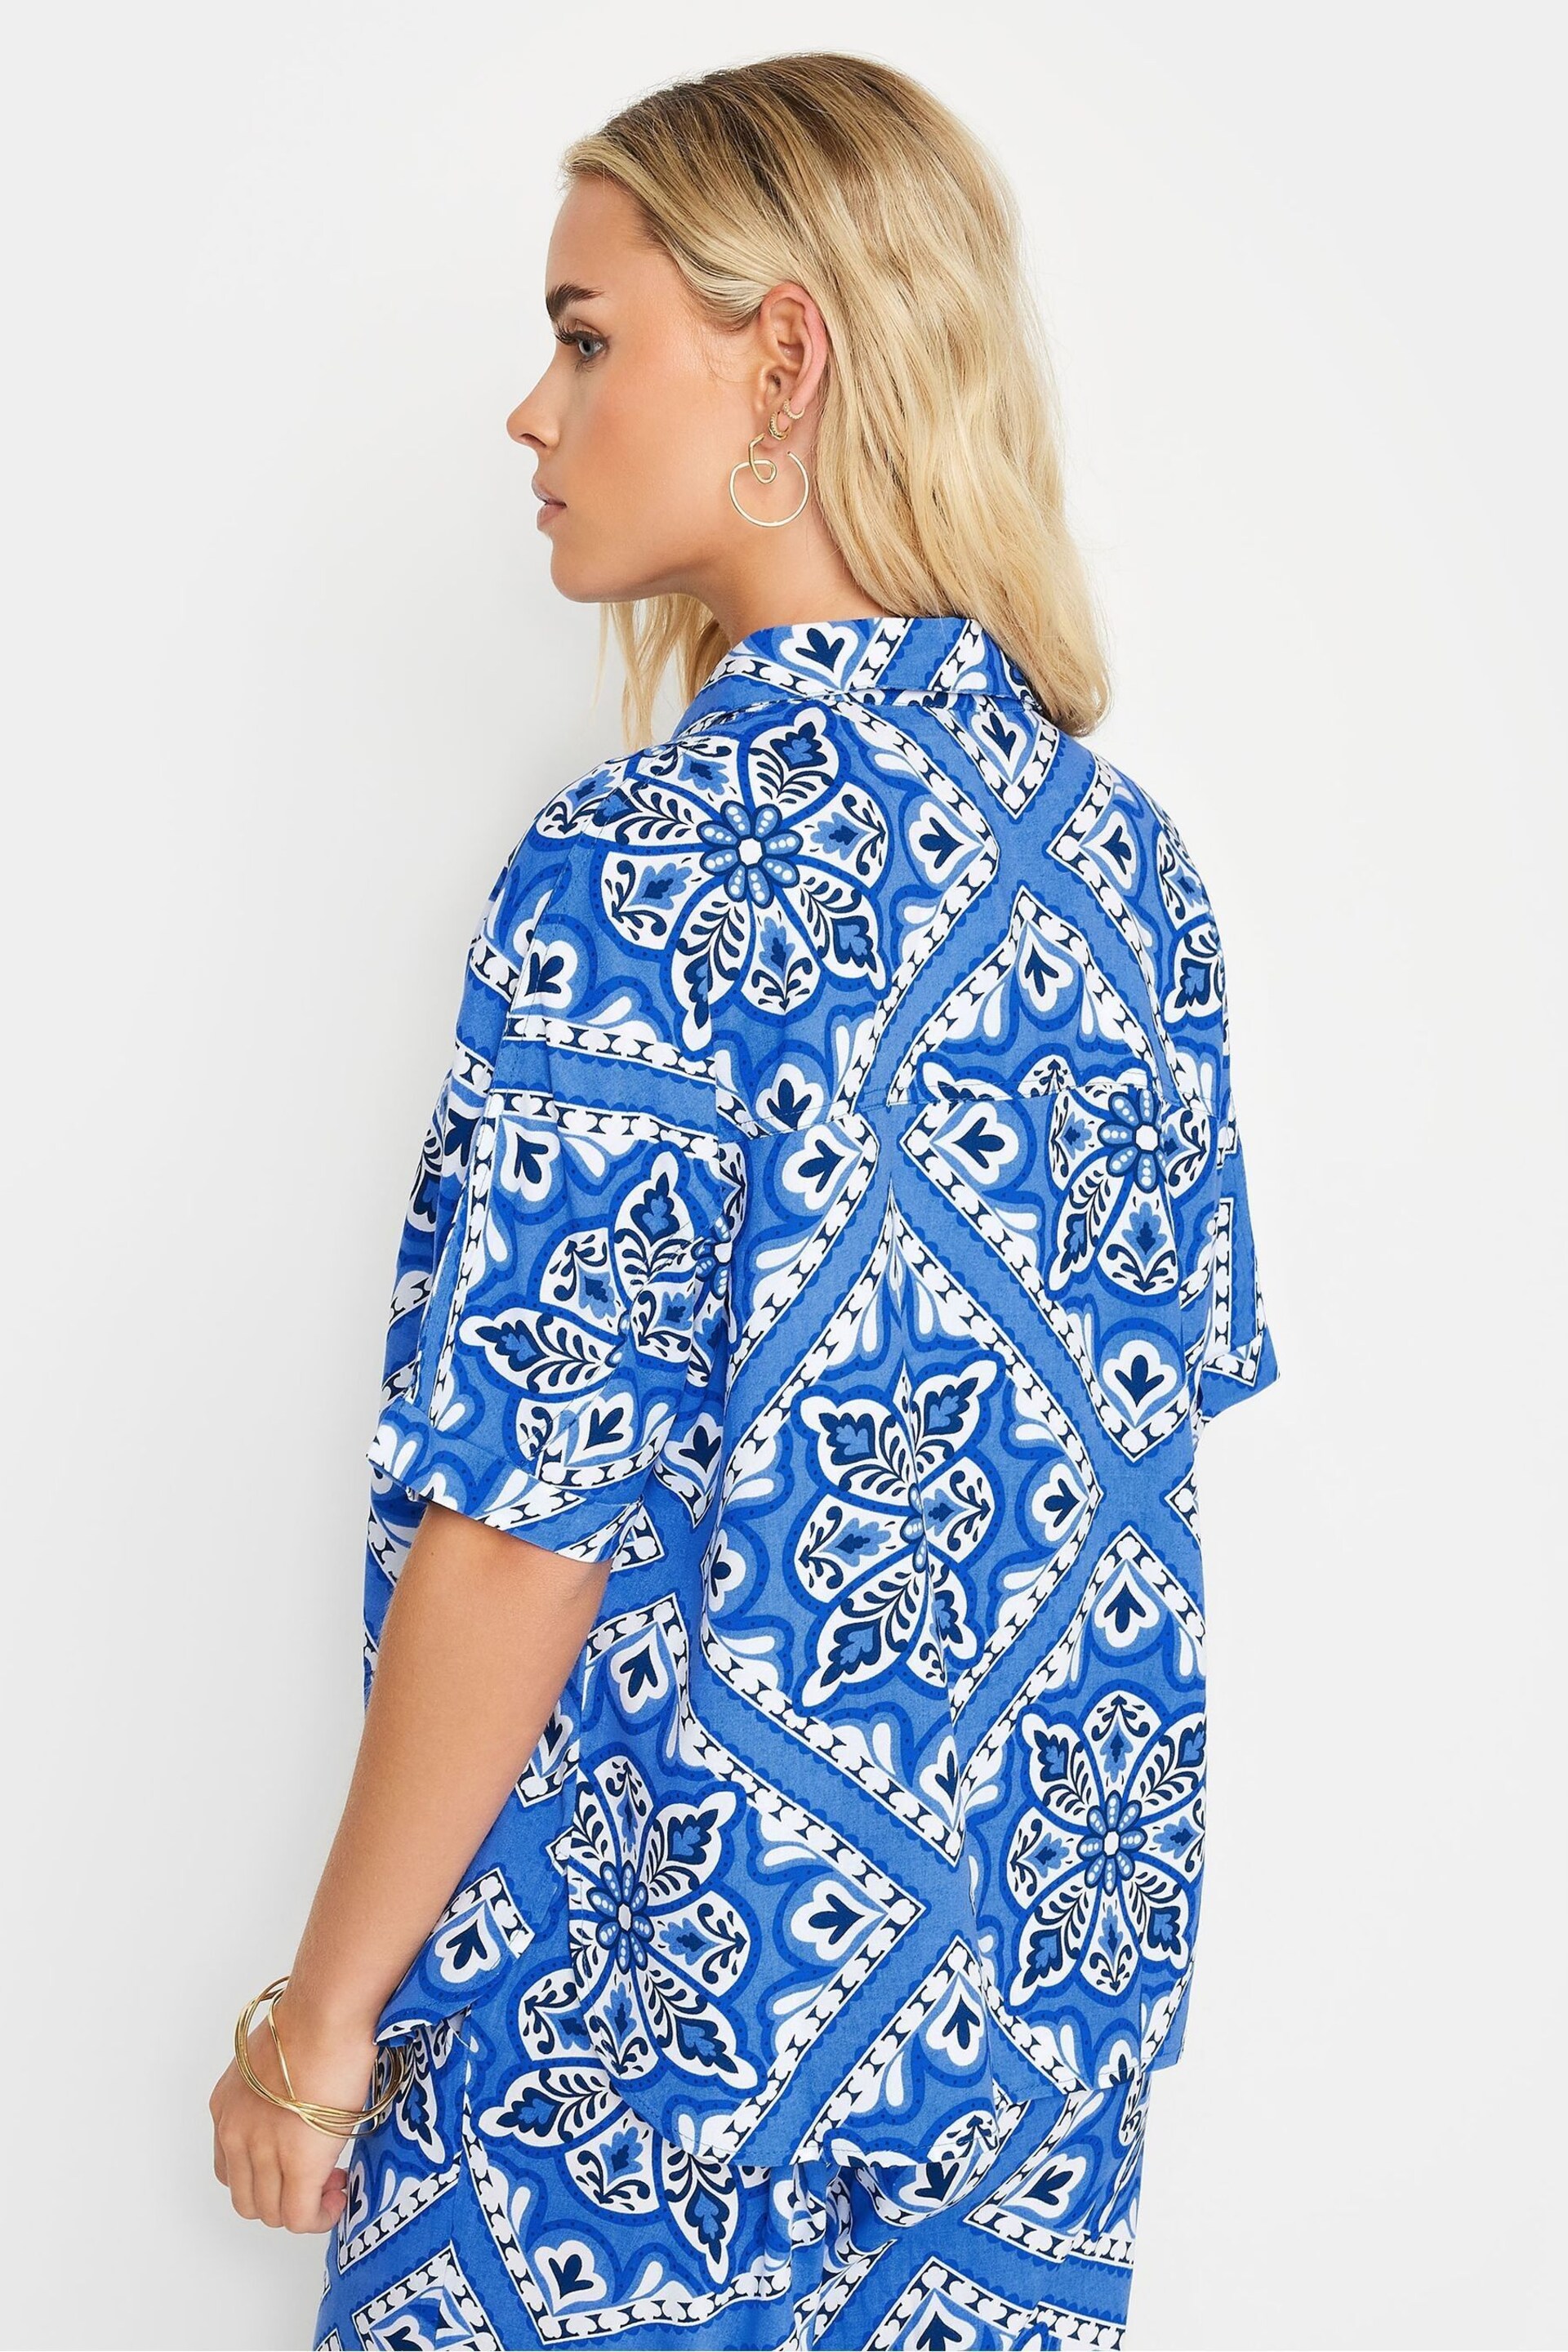 PixieGirl Petite Blue Tile Print Short Sleeve Shirt - Image 4 of 6